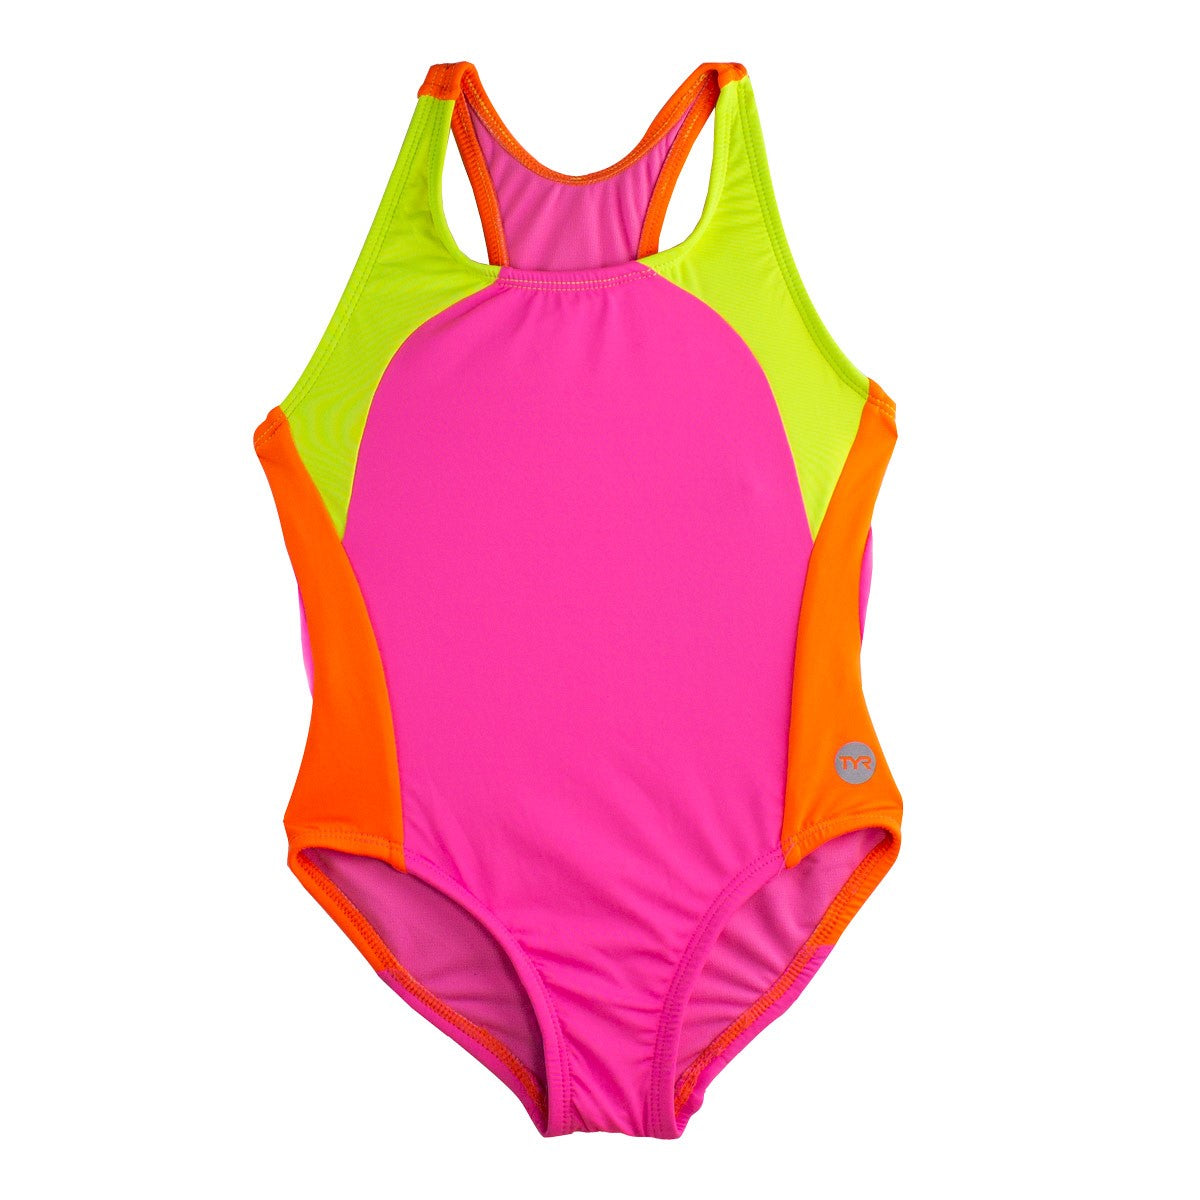 TYR Women's Durafast Elite Solid Maxfit Swimsuit